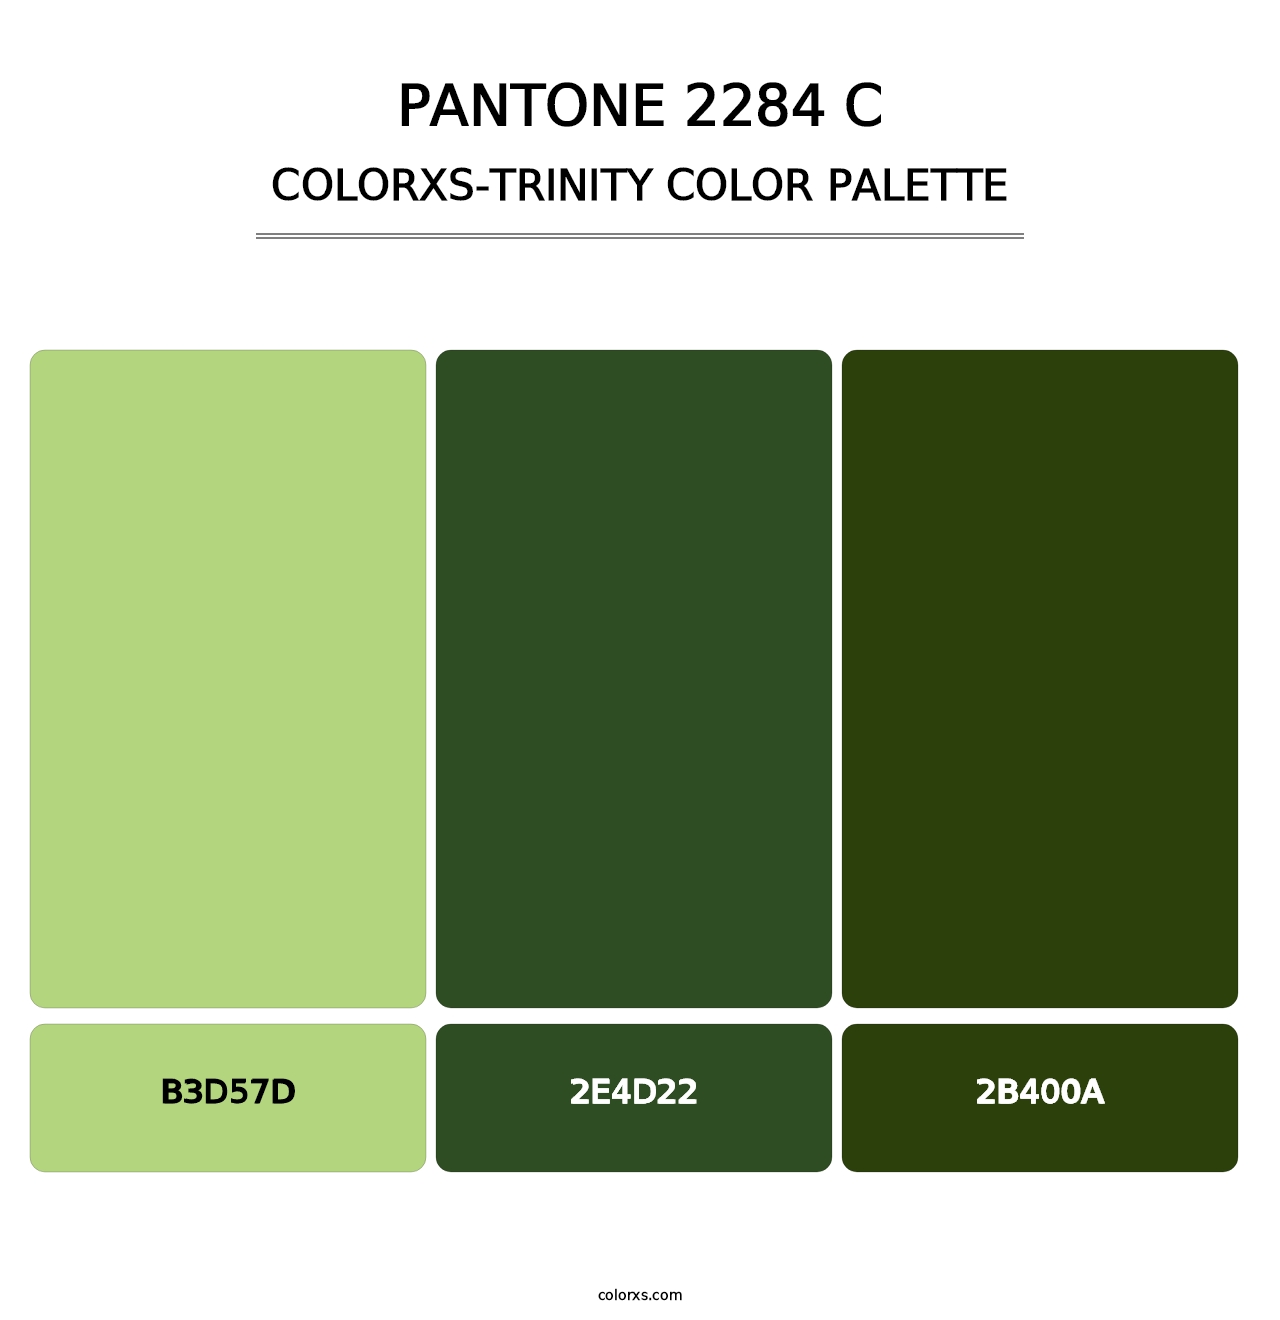 PANTONE 2284 C - Colorxs Trinity Palette